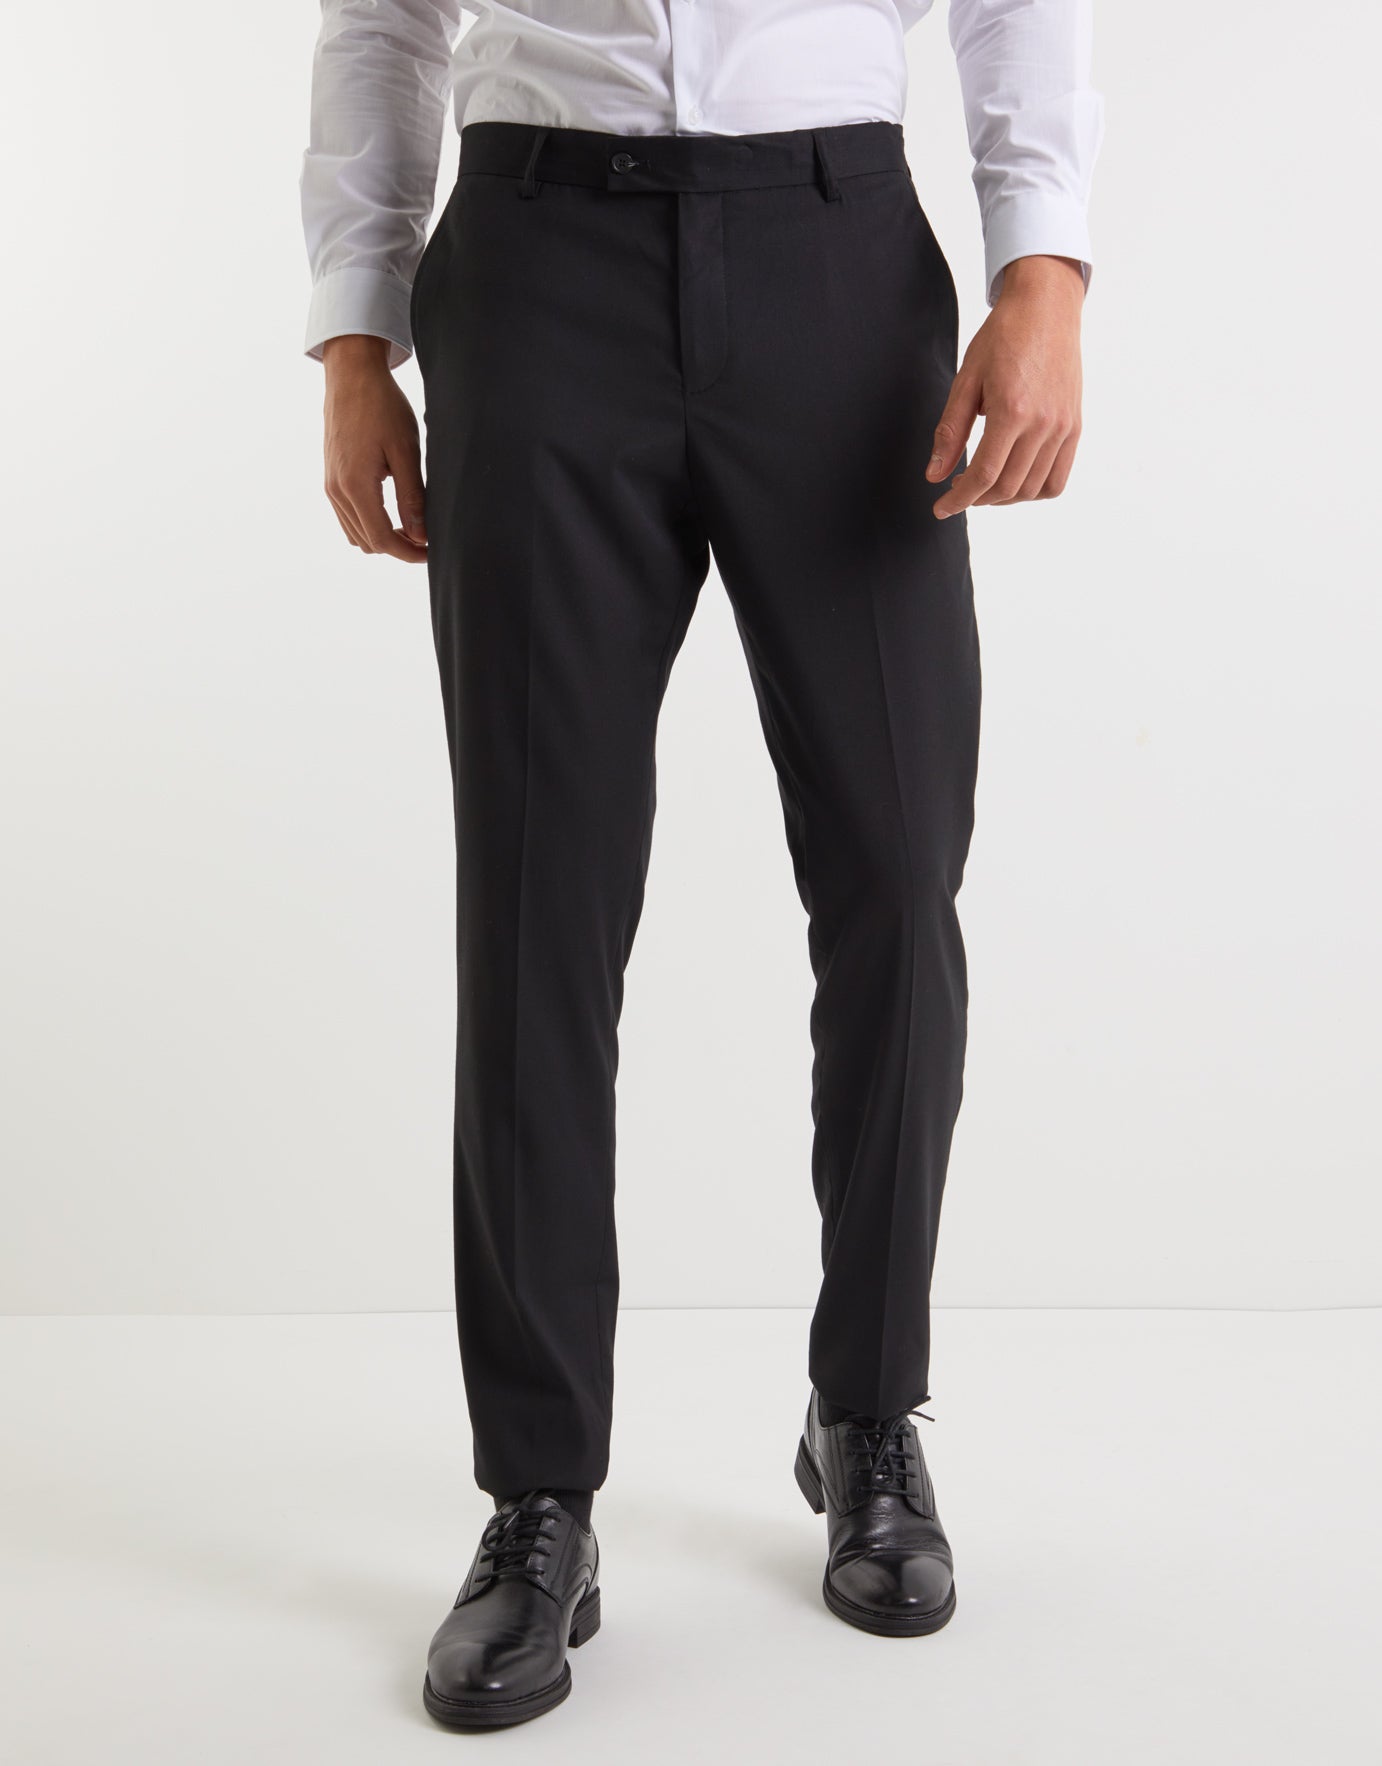 Chinos Vs Slacks (Dress Pants): What You Need To Know • Ready Sleek